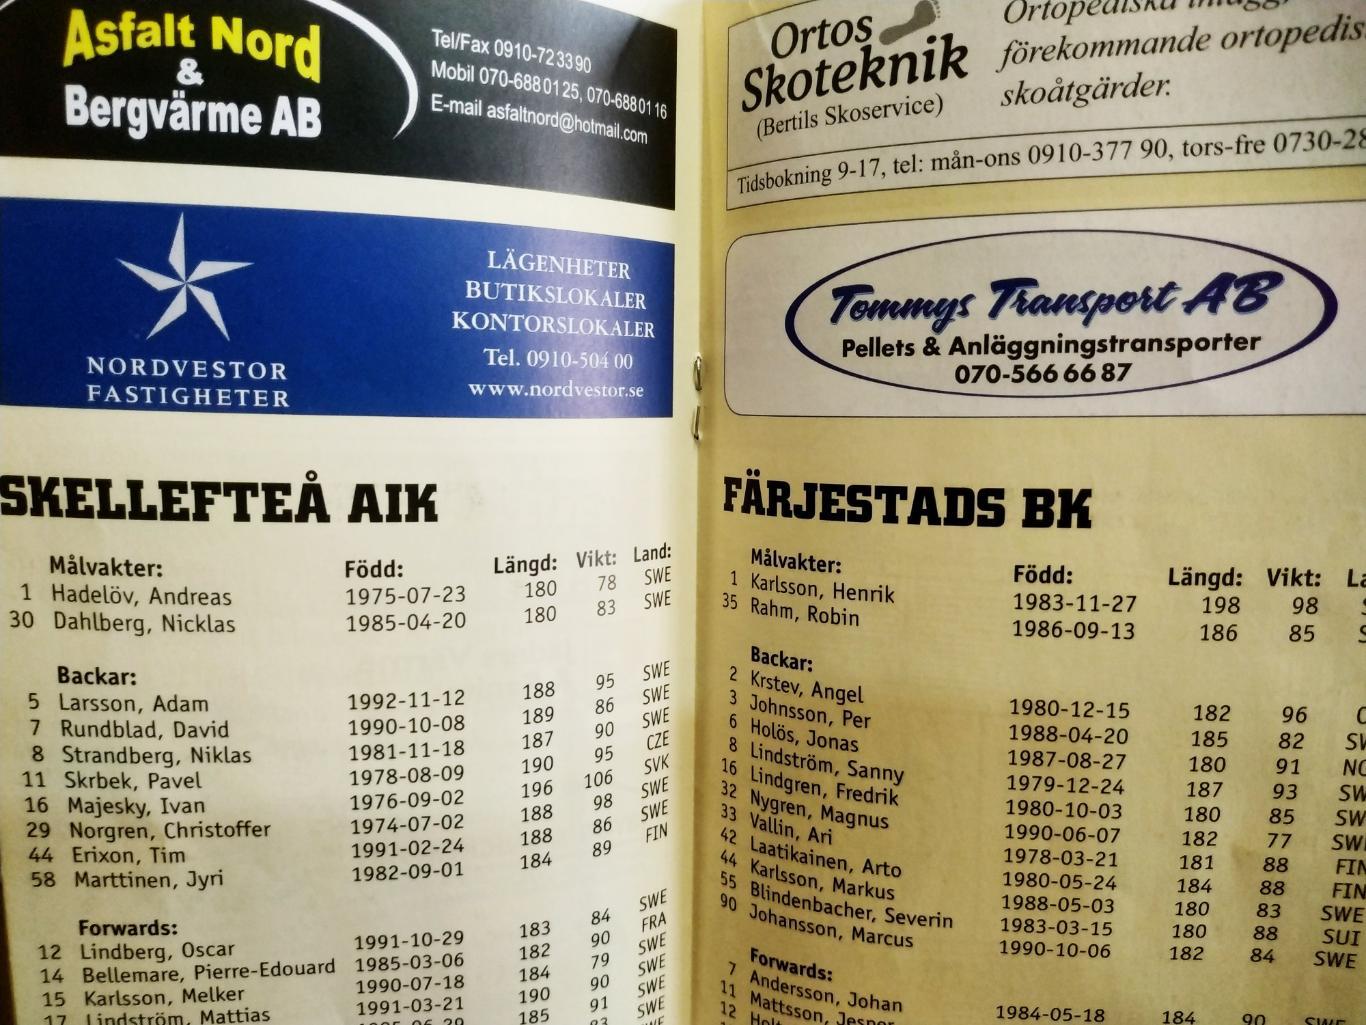 ХОККЕЙ ПРОГРАММА МАТЧА НХЛ 2010 MAR.30 SKELLEFTEA AIK VS FARJESTADS BK PROGRAM 1